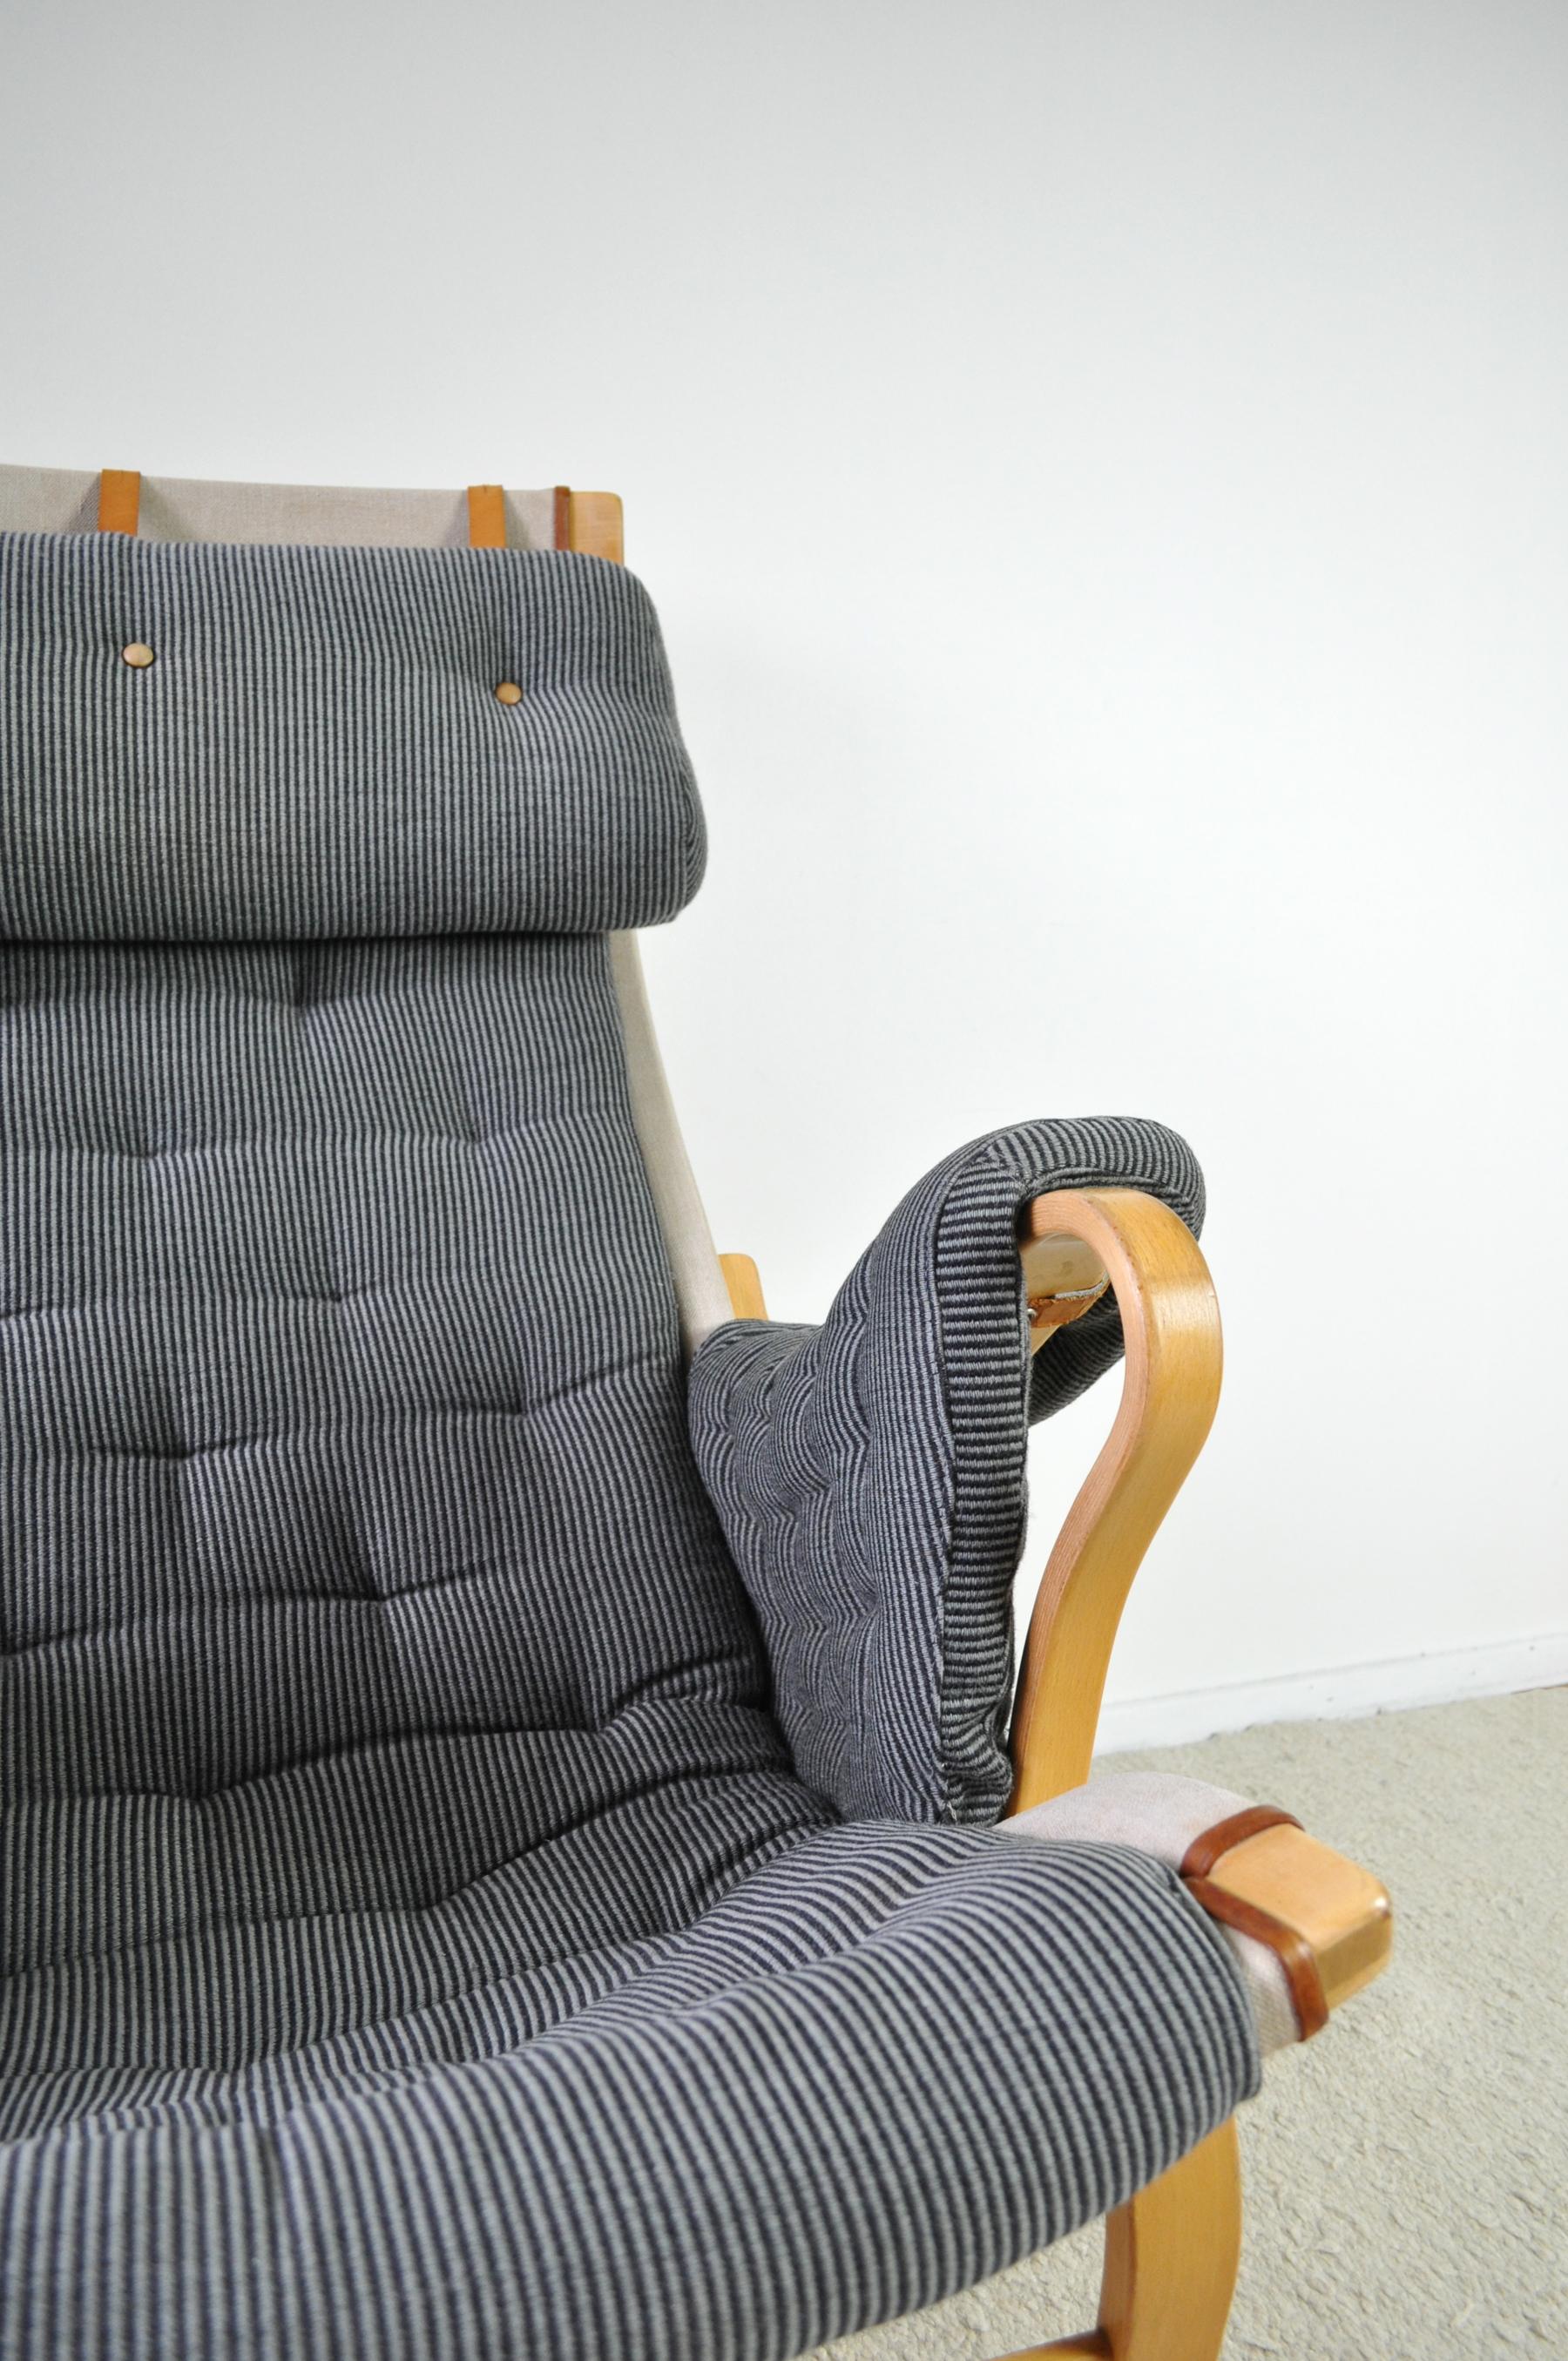 Bruno Mathsson Lounge Chair Pernilla 69 for DUX, Sweden 2